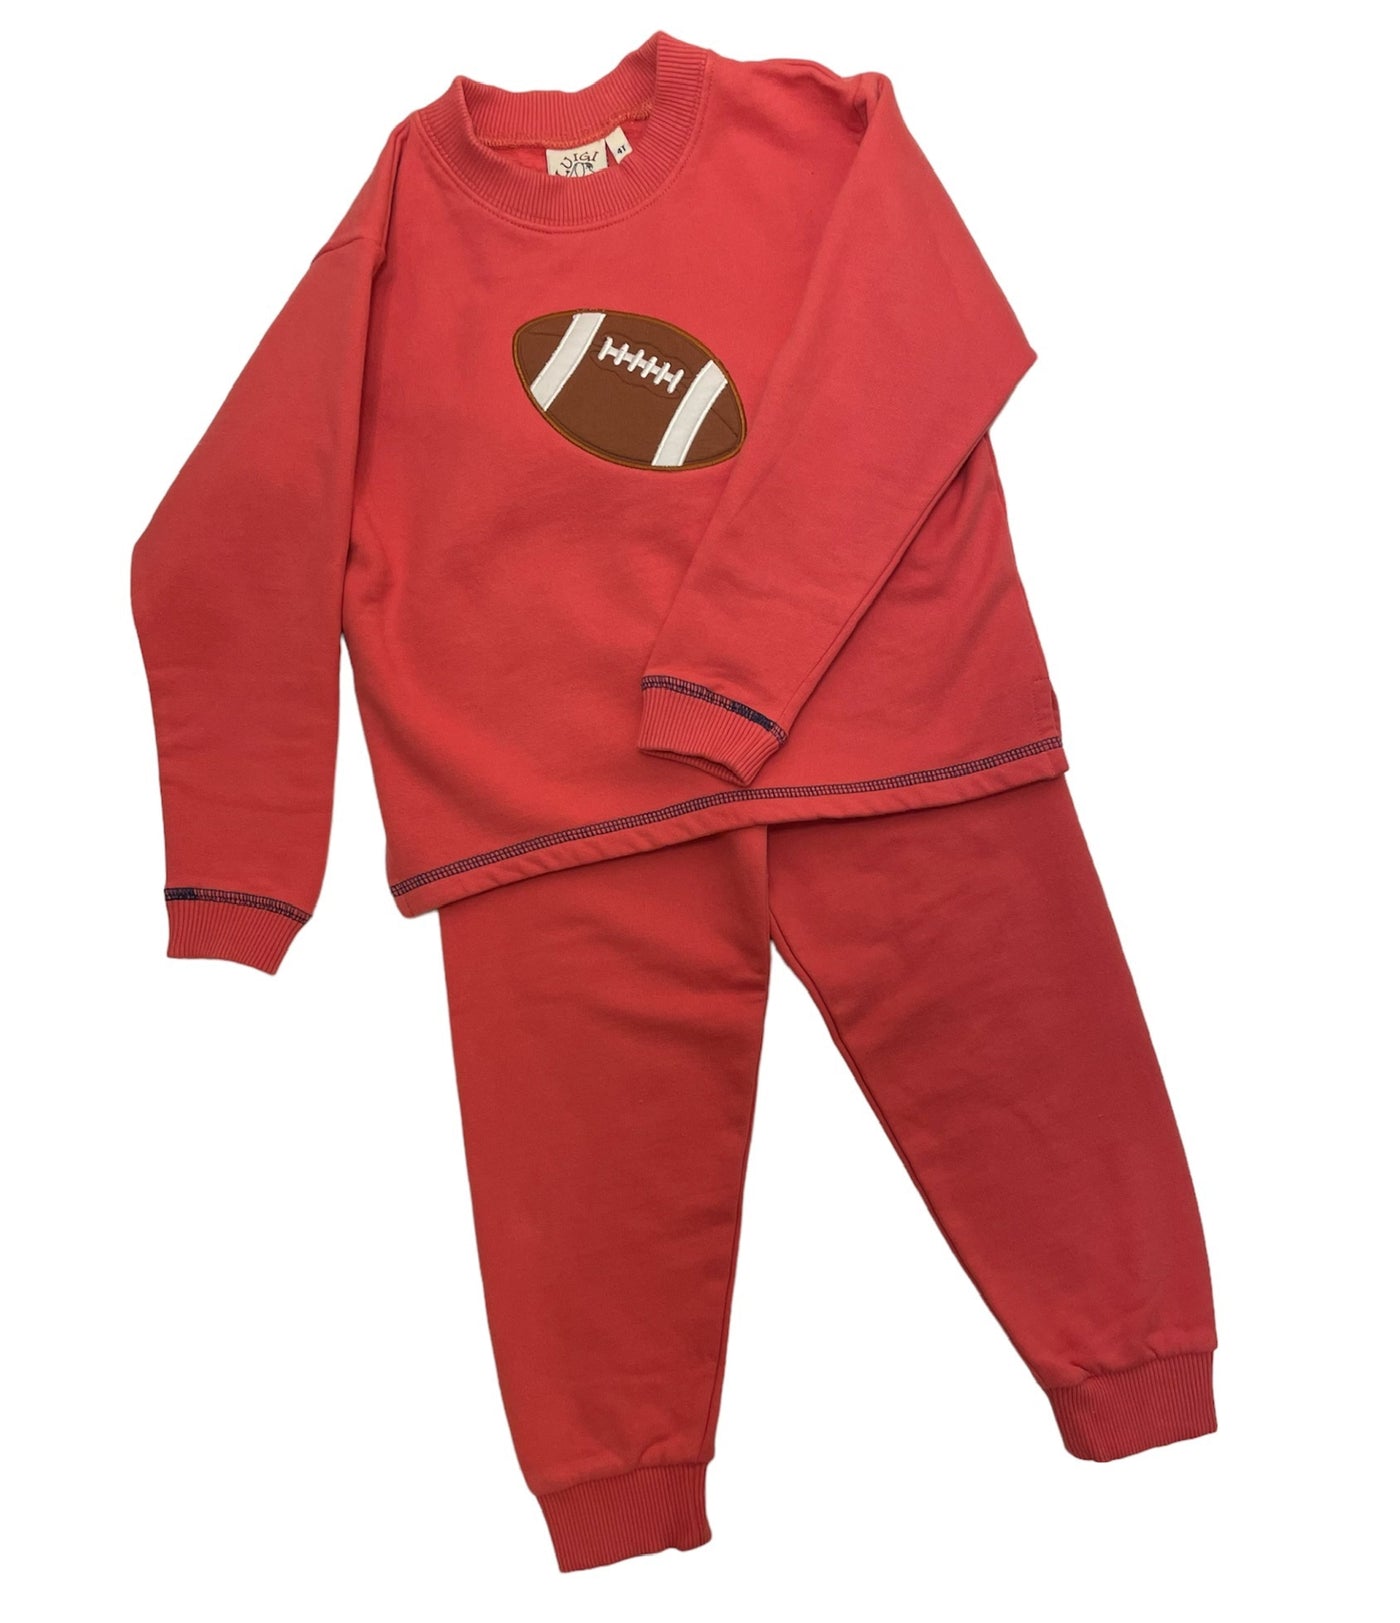 Nantucket Red Fleece Sweatpants